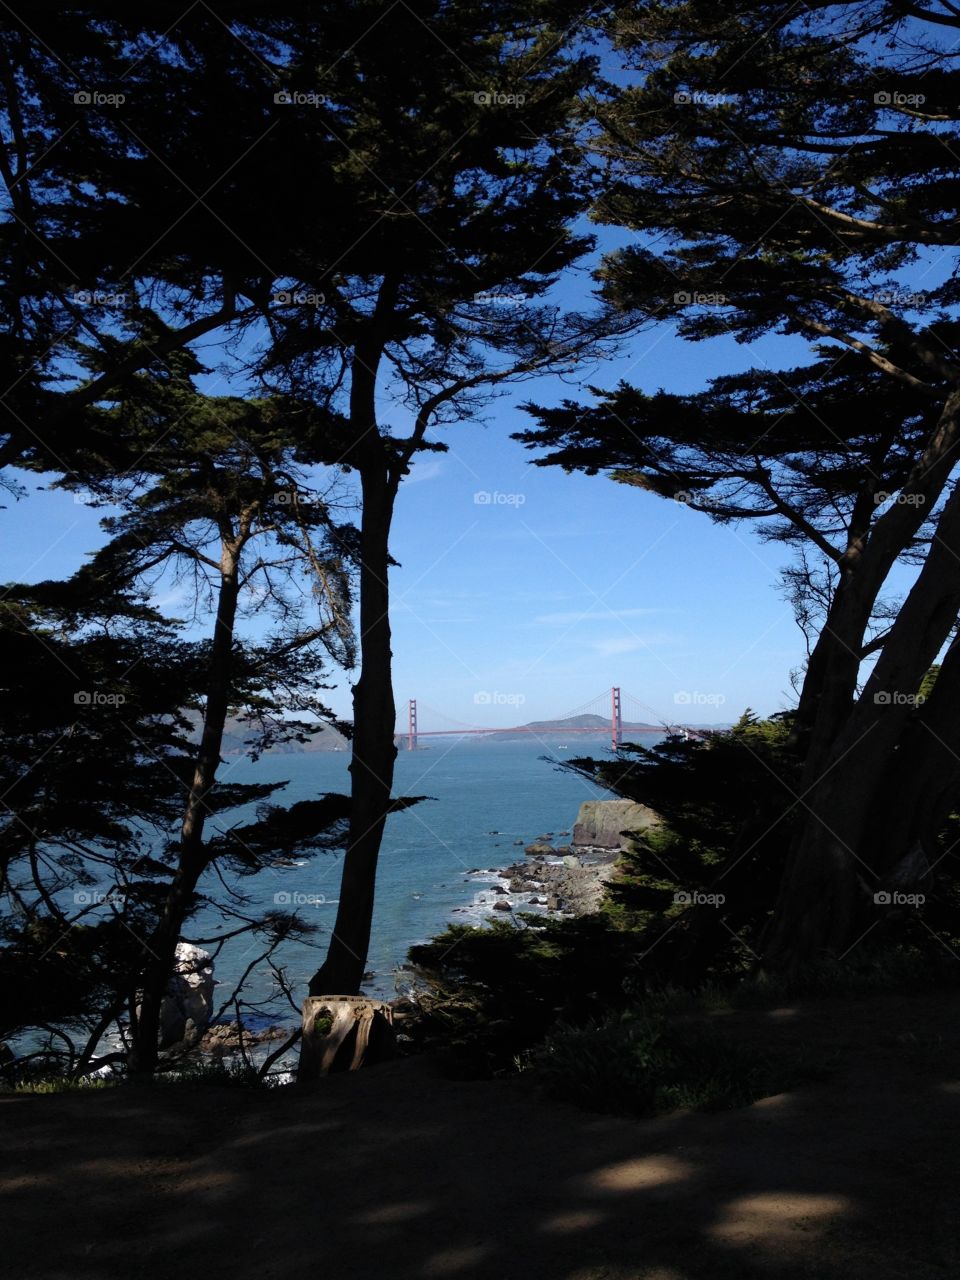 Golden gate view. Tree framed view of the Golden Gate Bridge 